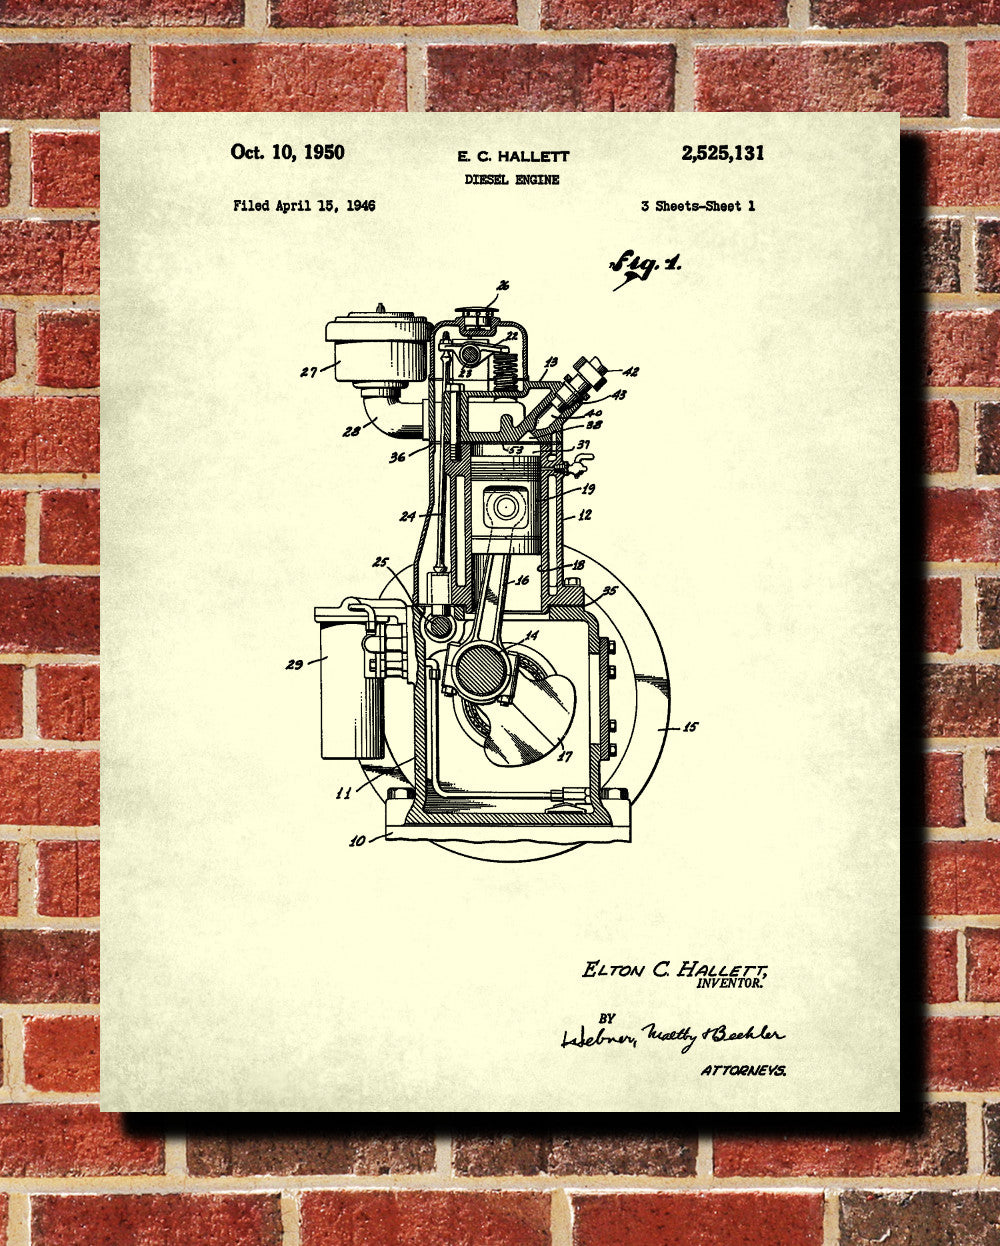 Diesel Engine Patent Print Garage Poster Workshop Blueprint 